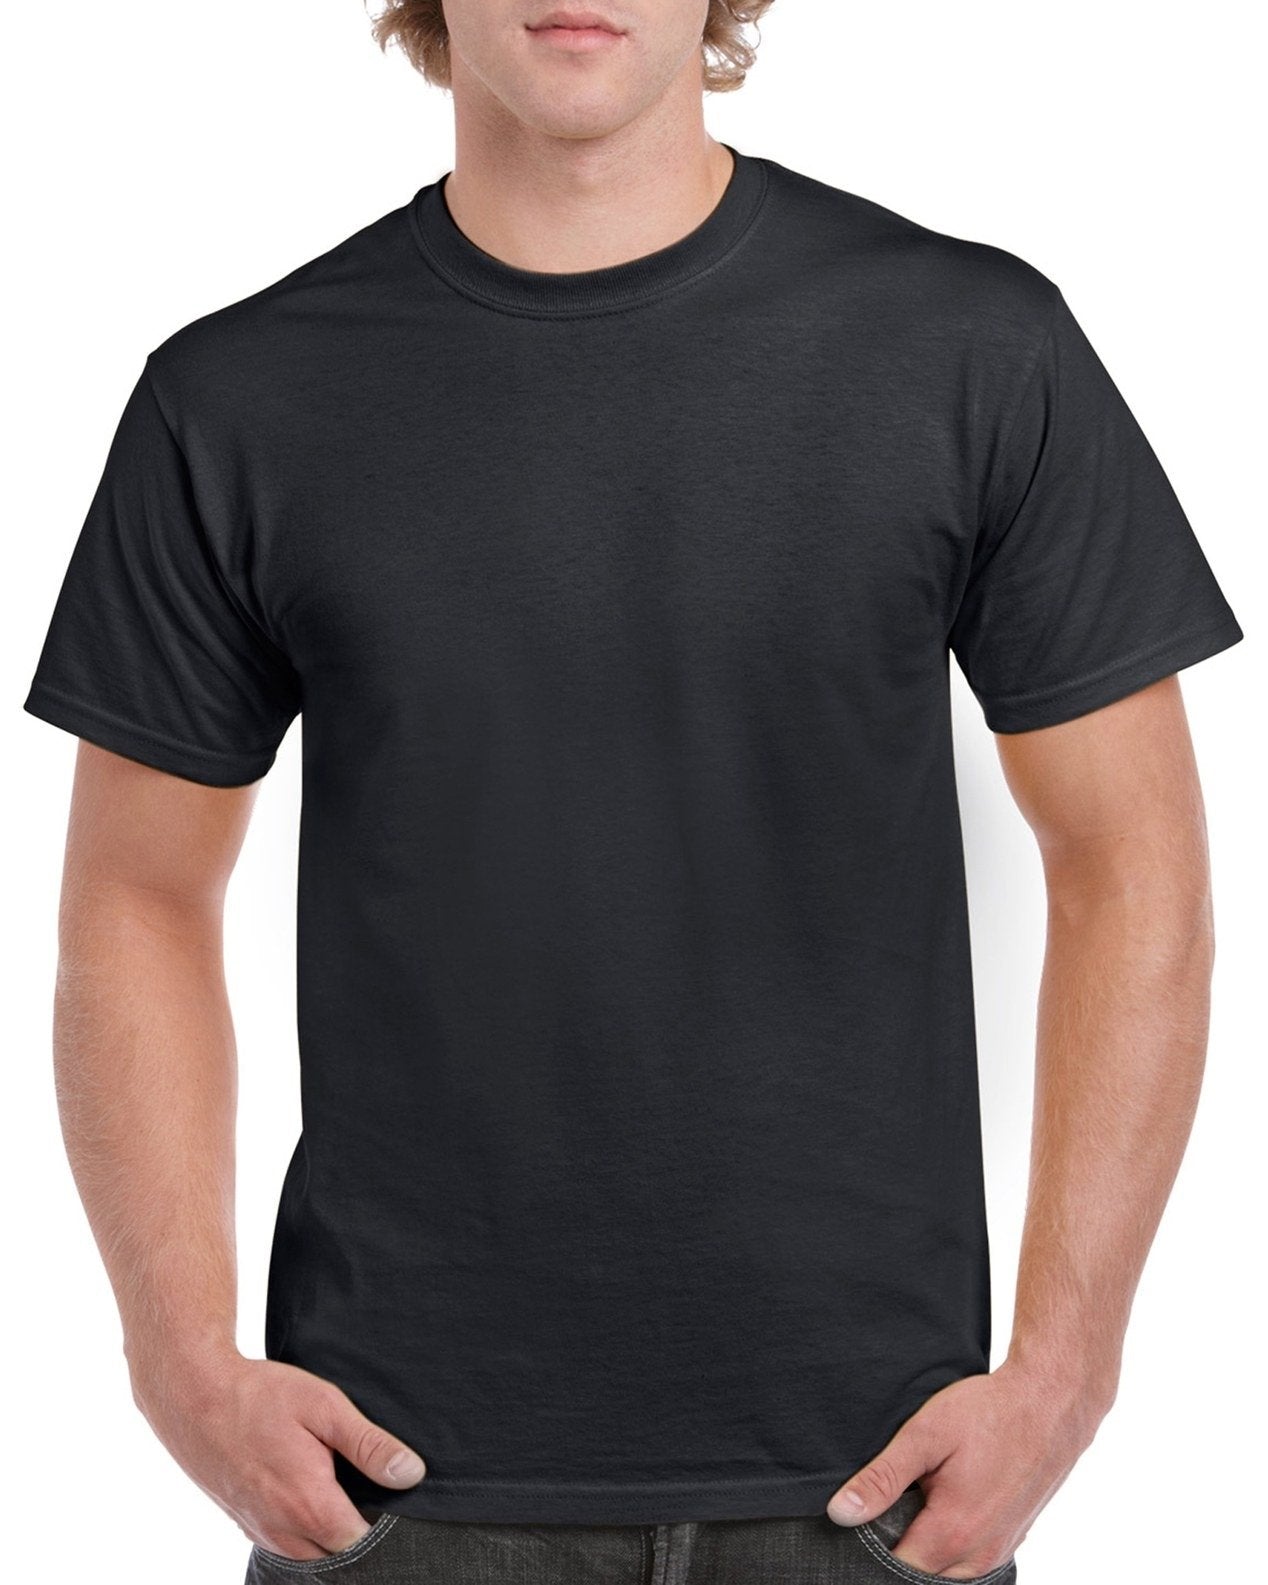 Discover Erykah Badu Graphic T-Shirt, unisex Tee Gift Fan